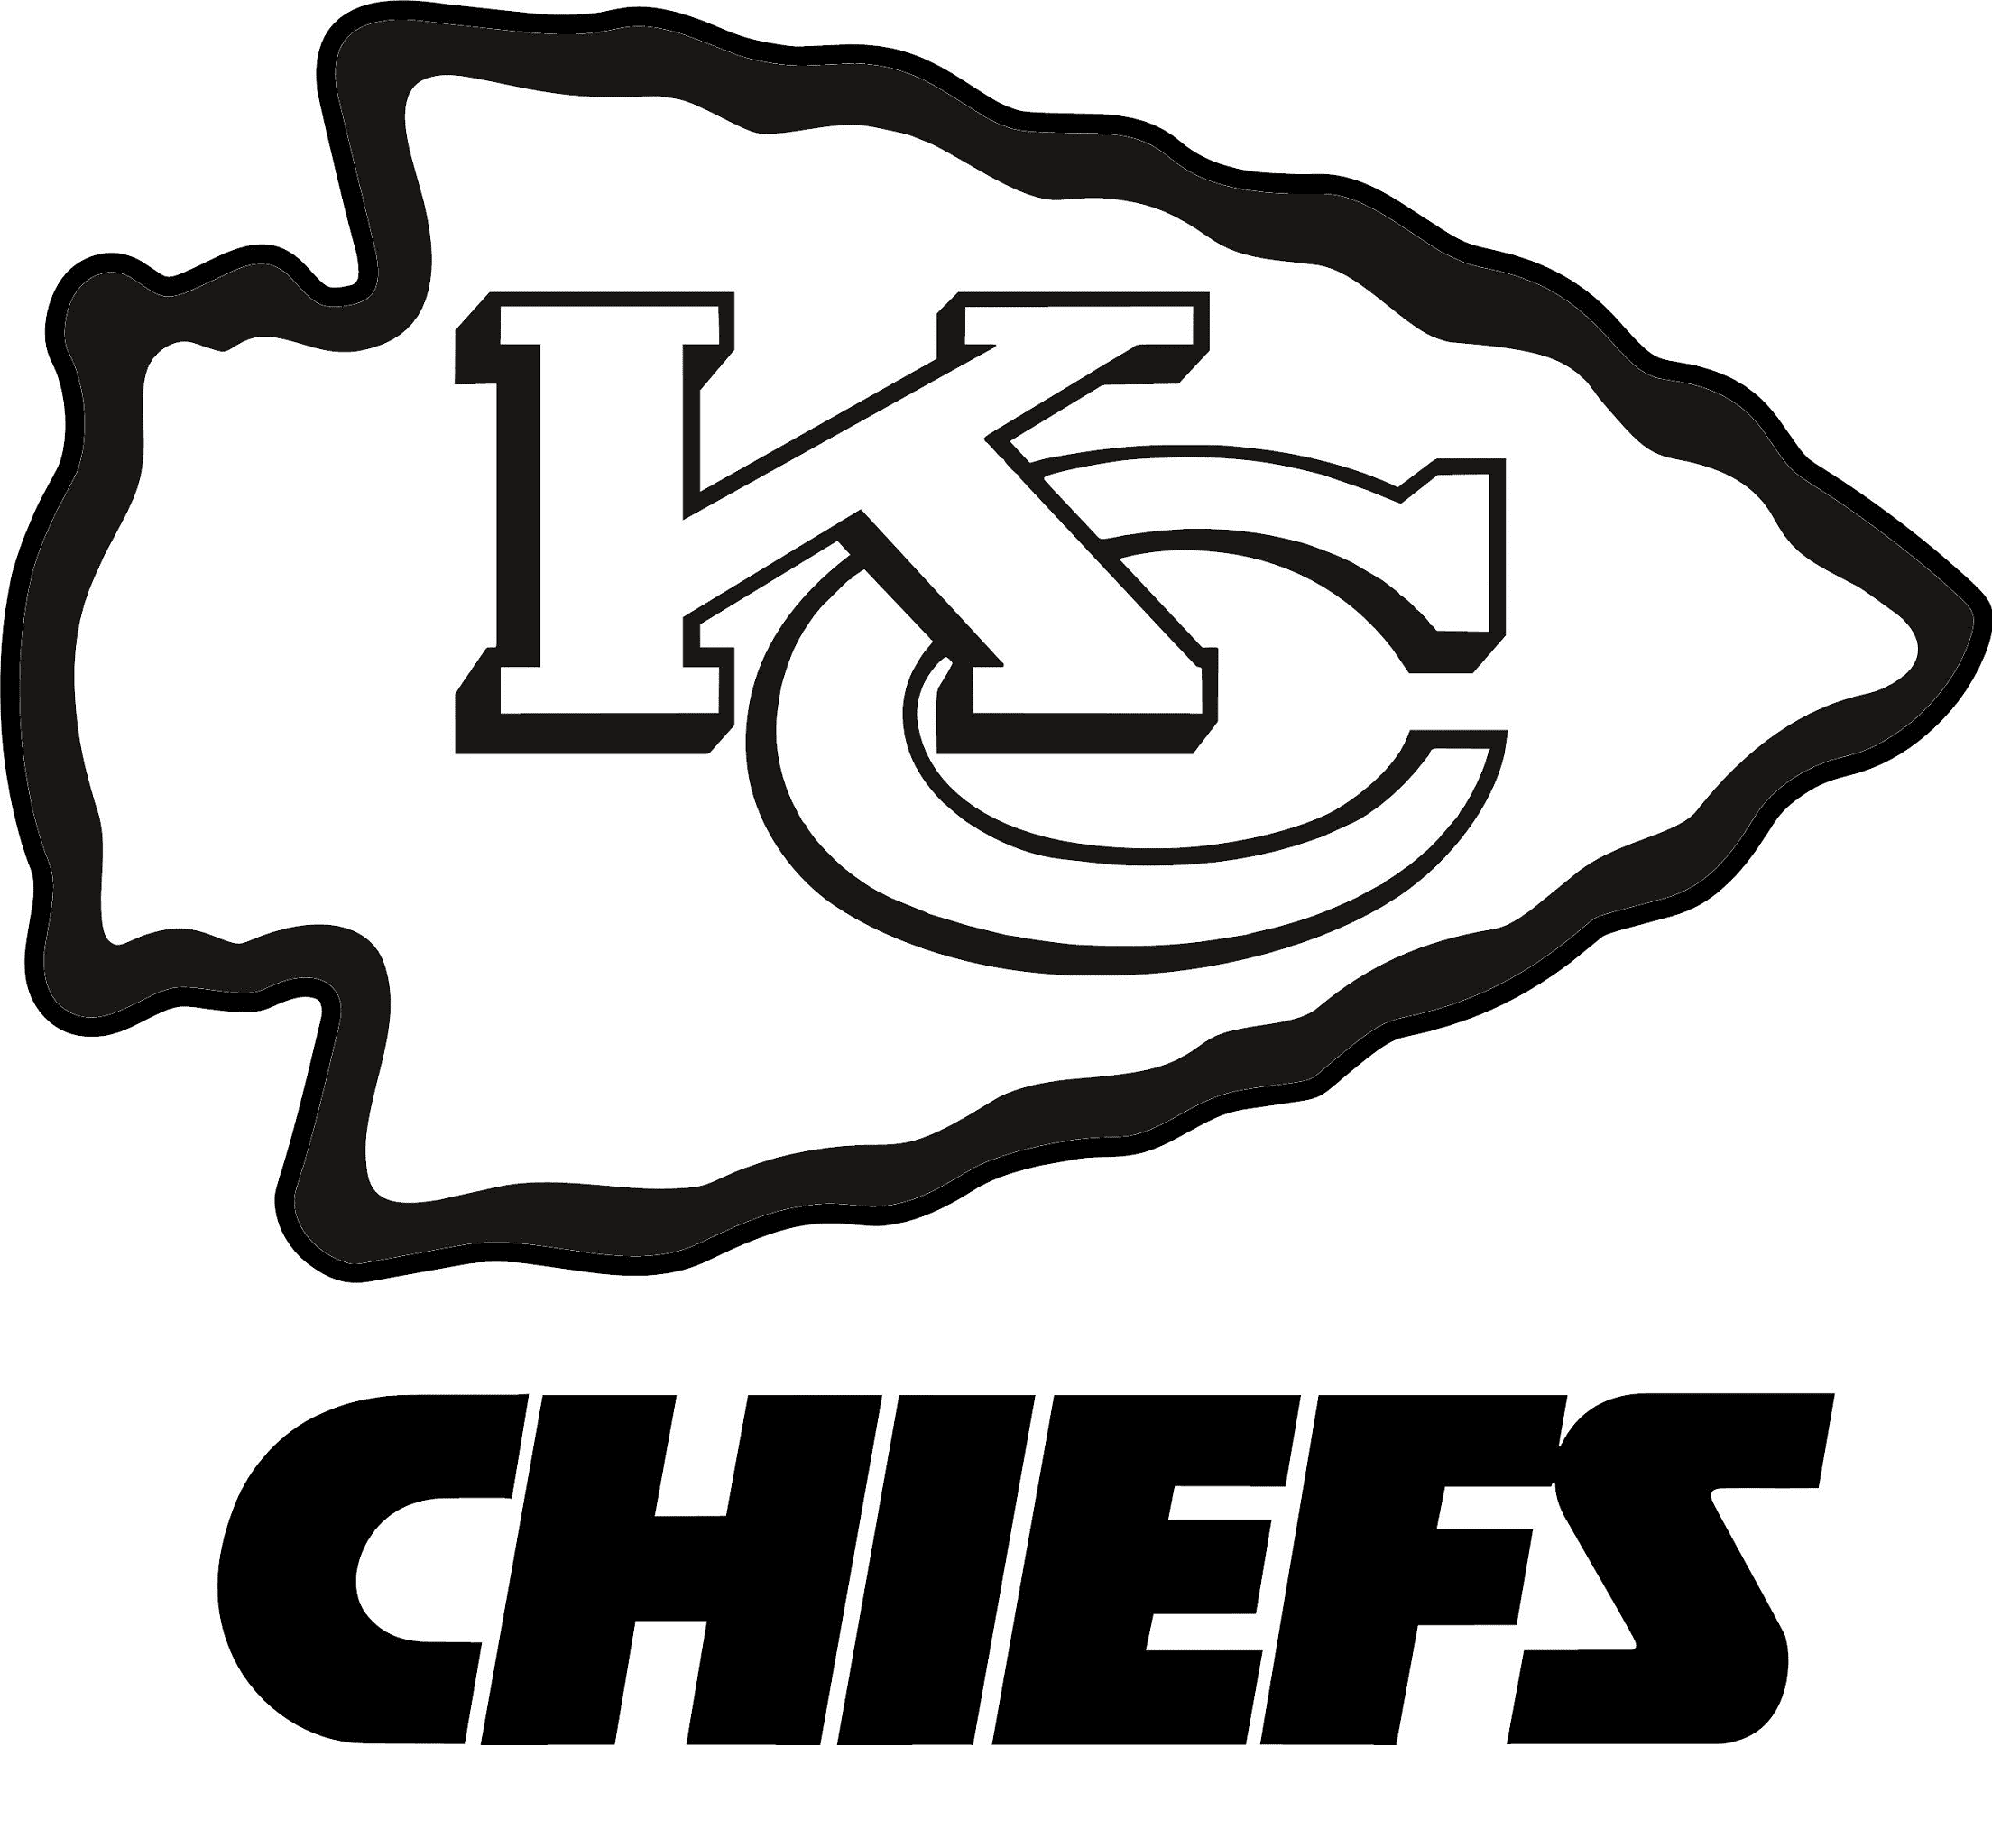 Kc Chiefs Logo Coloring Pages - Kansas City Chiefs Coloring Pages -  Coloring Pages For Kids And Adults